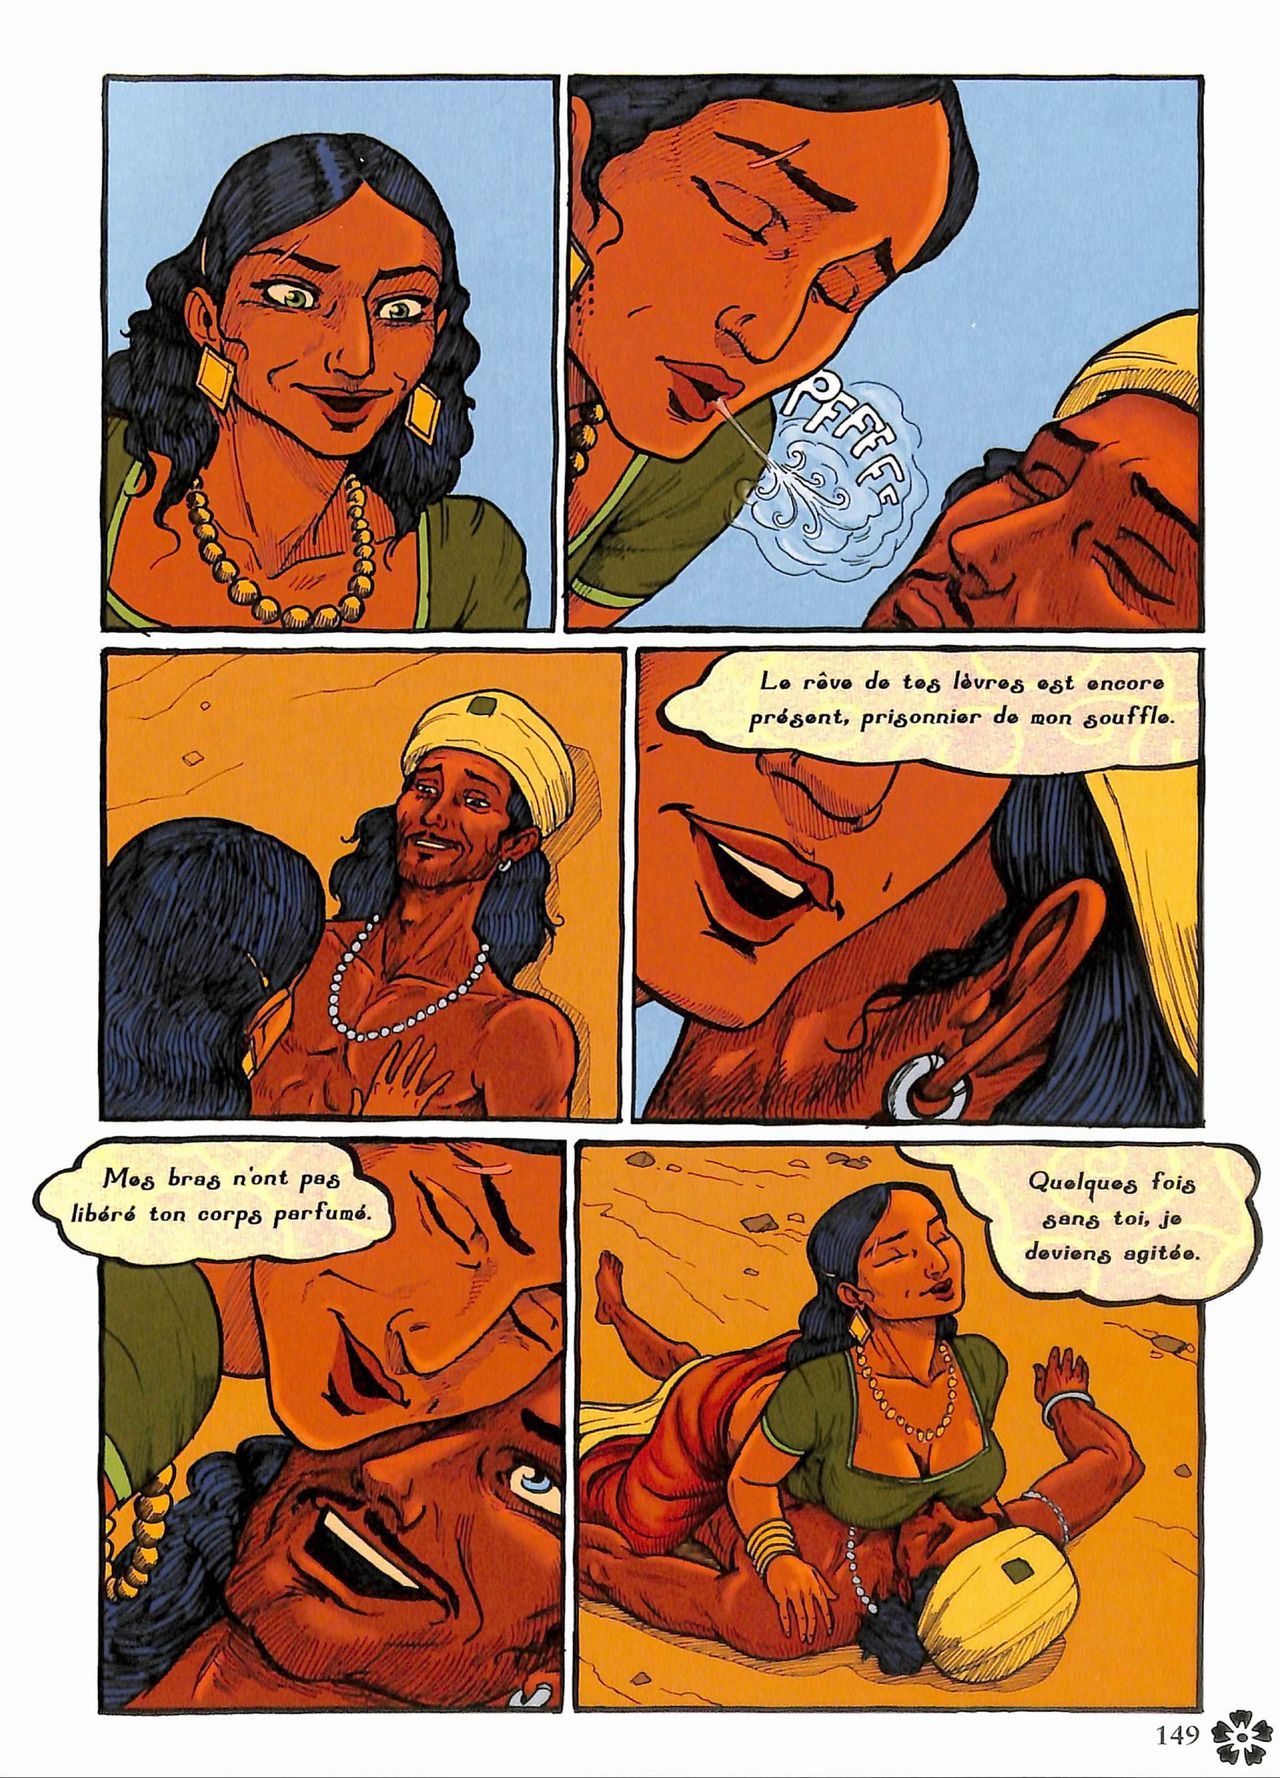 Kama Sutra en bandes dessinées - Kama Sutra with Comics numero d'image 149